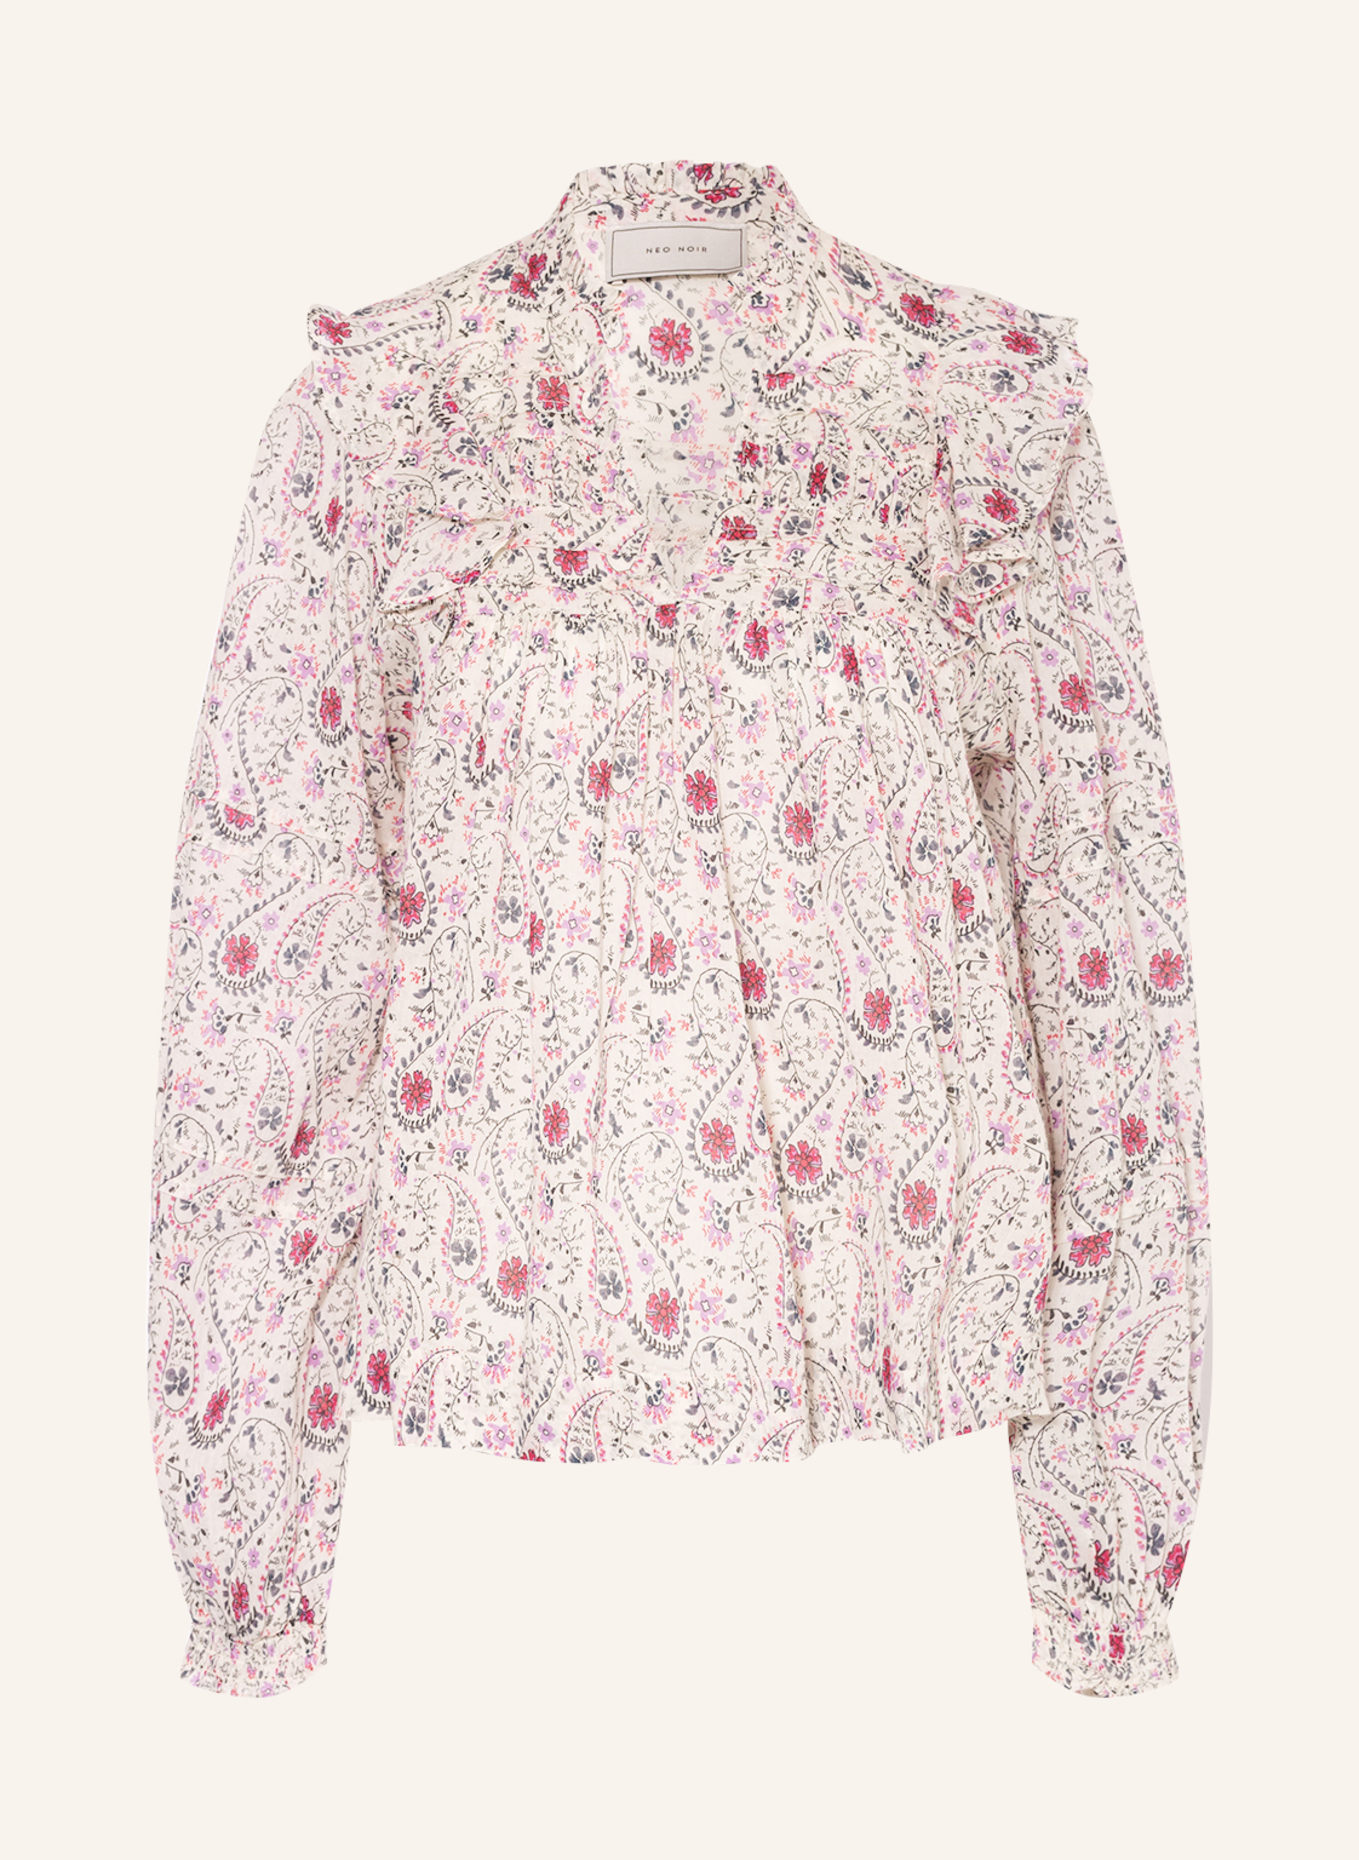 NEO NOIR Shirt blouse HAMA in cream/ pink/ dark gray | Breuninger